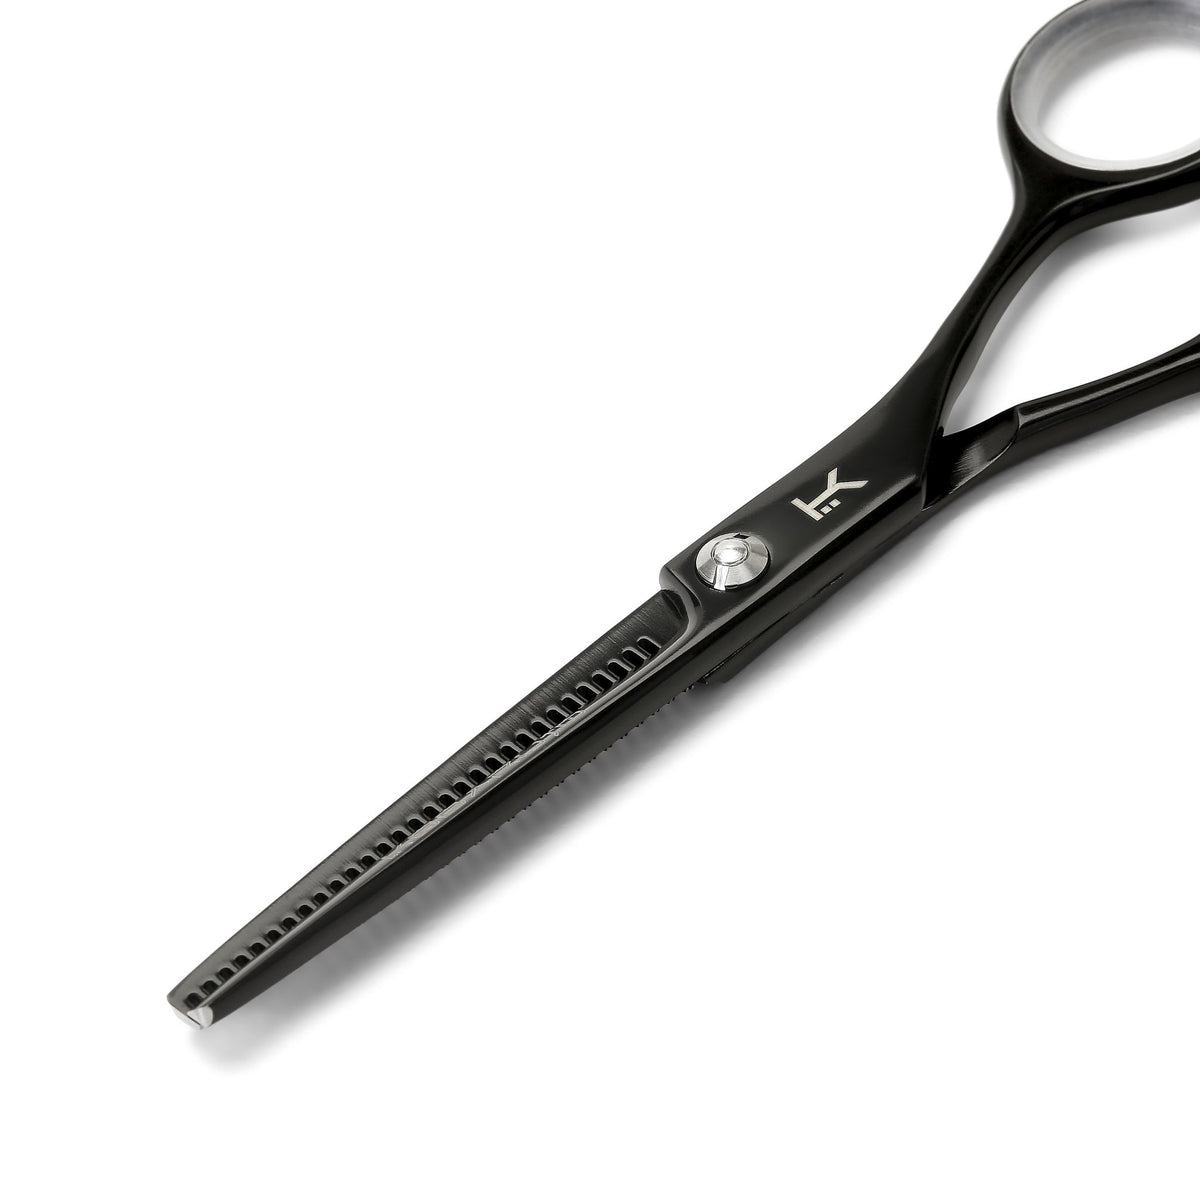 Kobaruto Black Hair Thinning Scissors 5.5 inch 30 Teeth - Beauty Hair Products Ltd